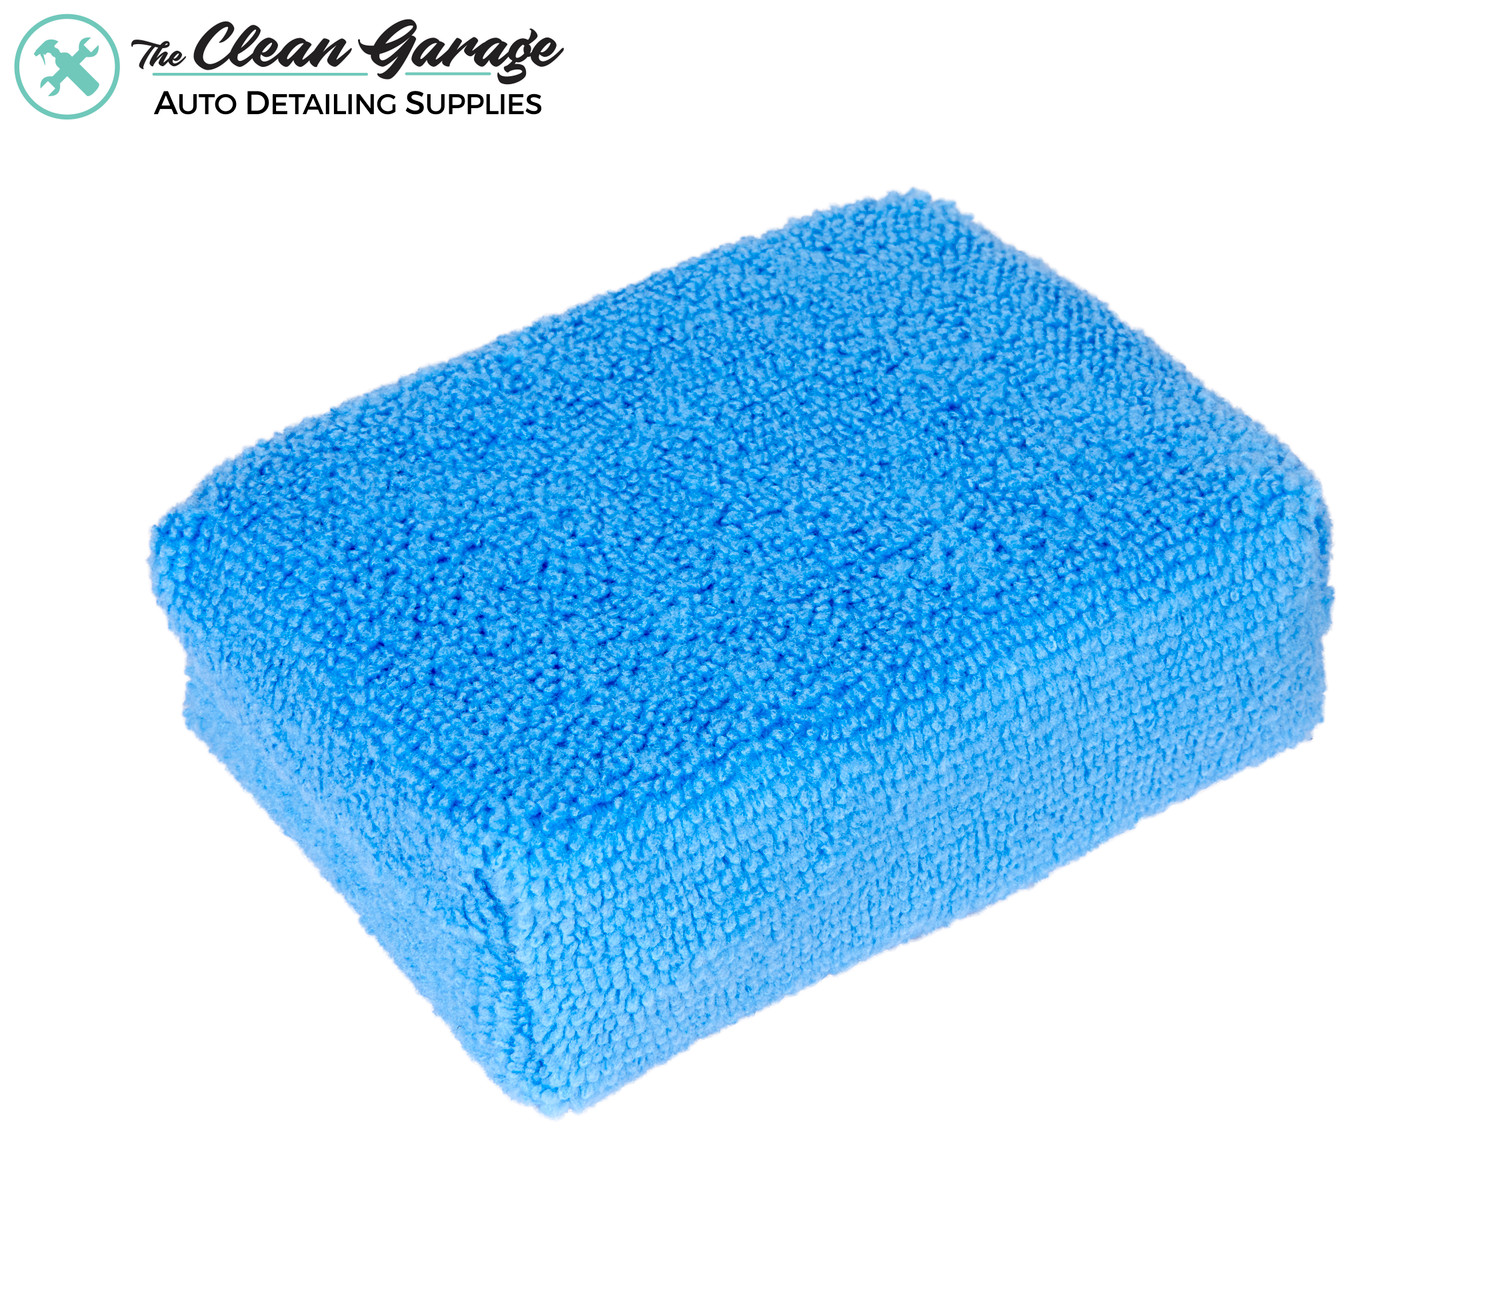 Microfiber Wax Applicator Sponge Blue 4 x 6